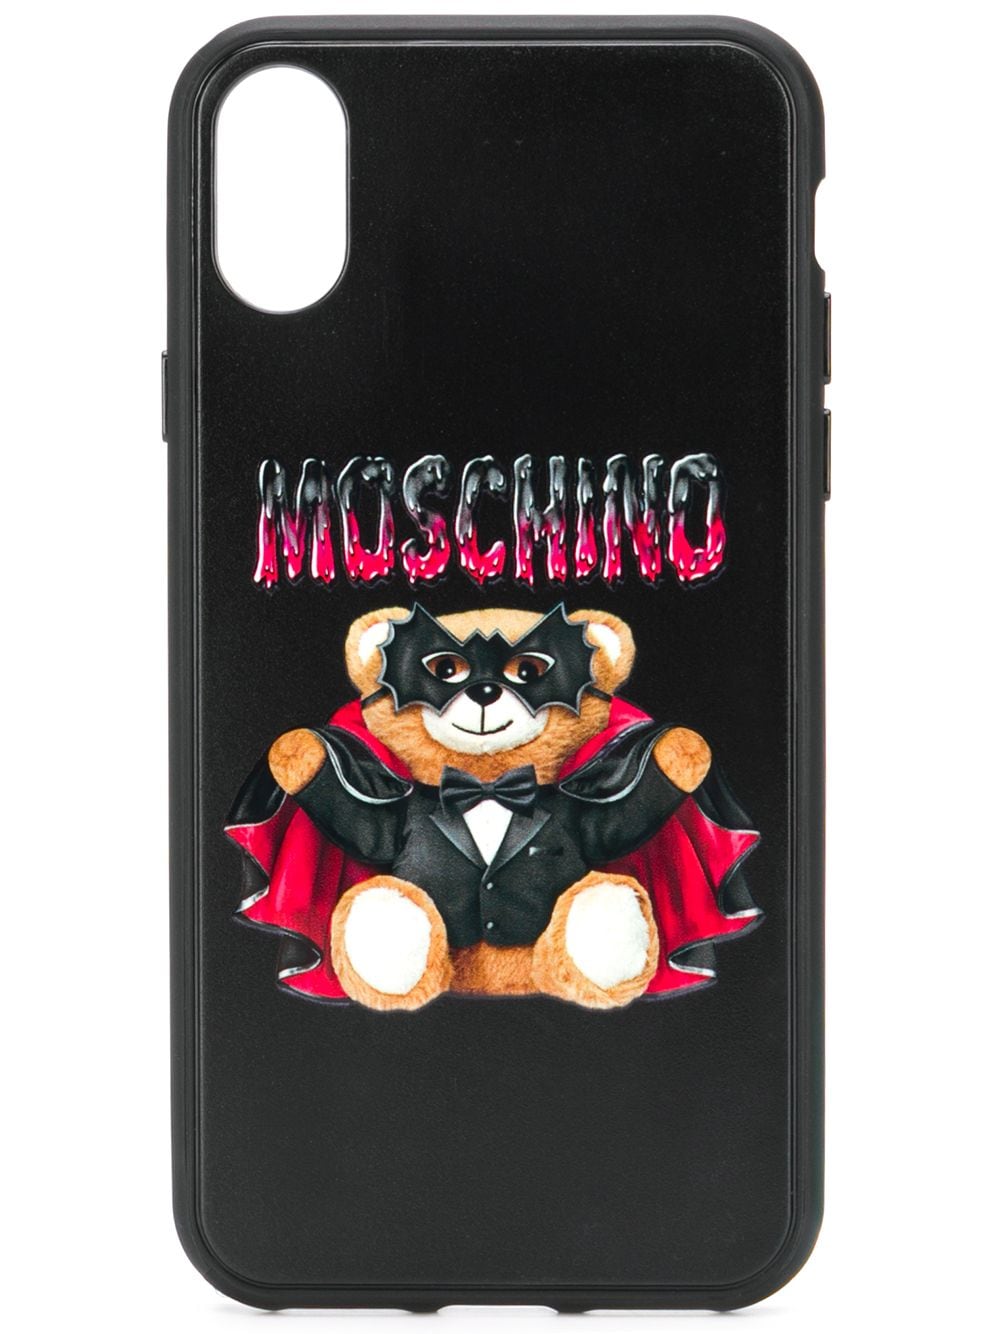 MOSCHINO BAT TEDDY BEAR IPHONE X/XS CASE